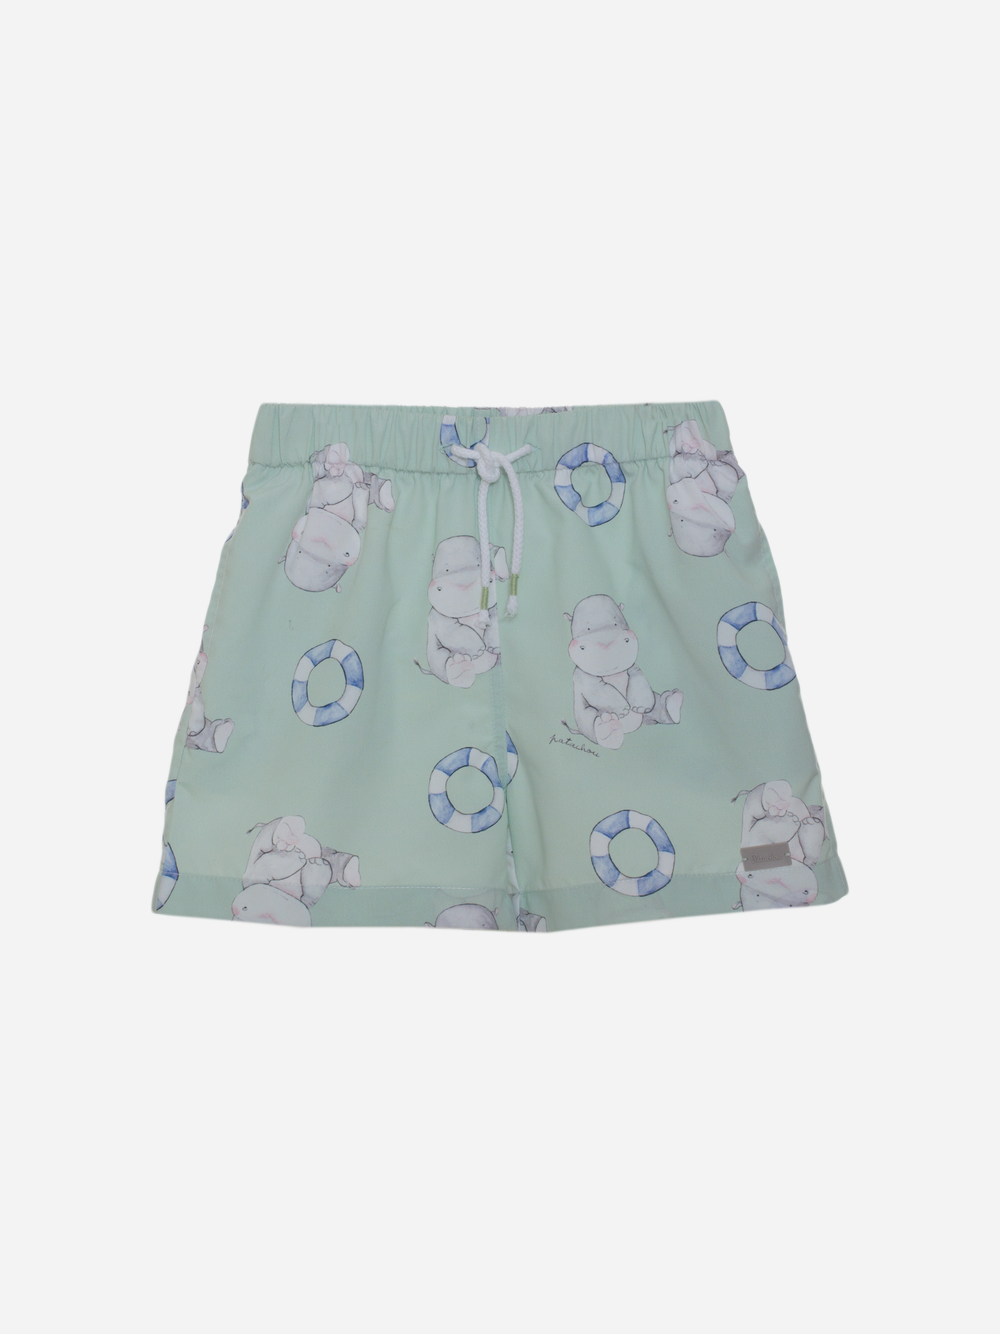 Hippo print swim shorts